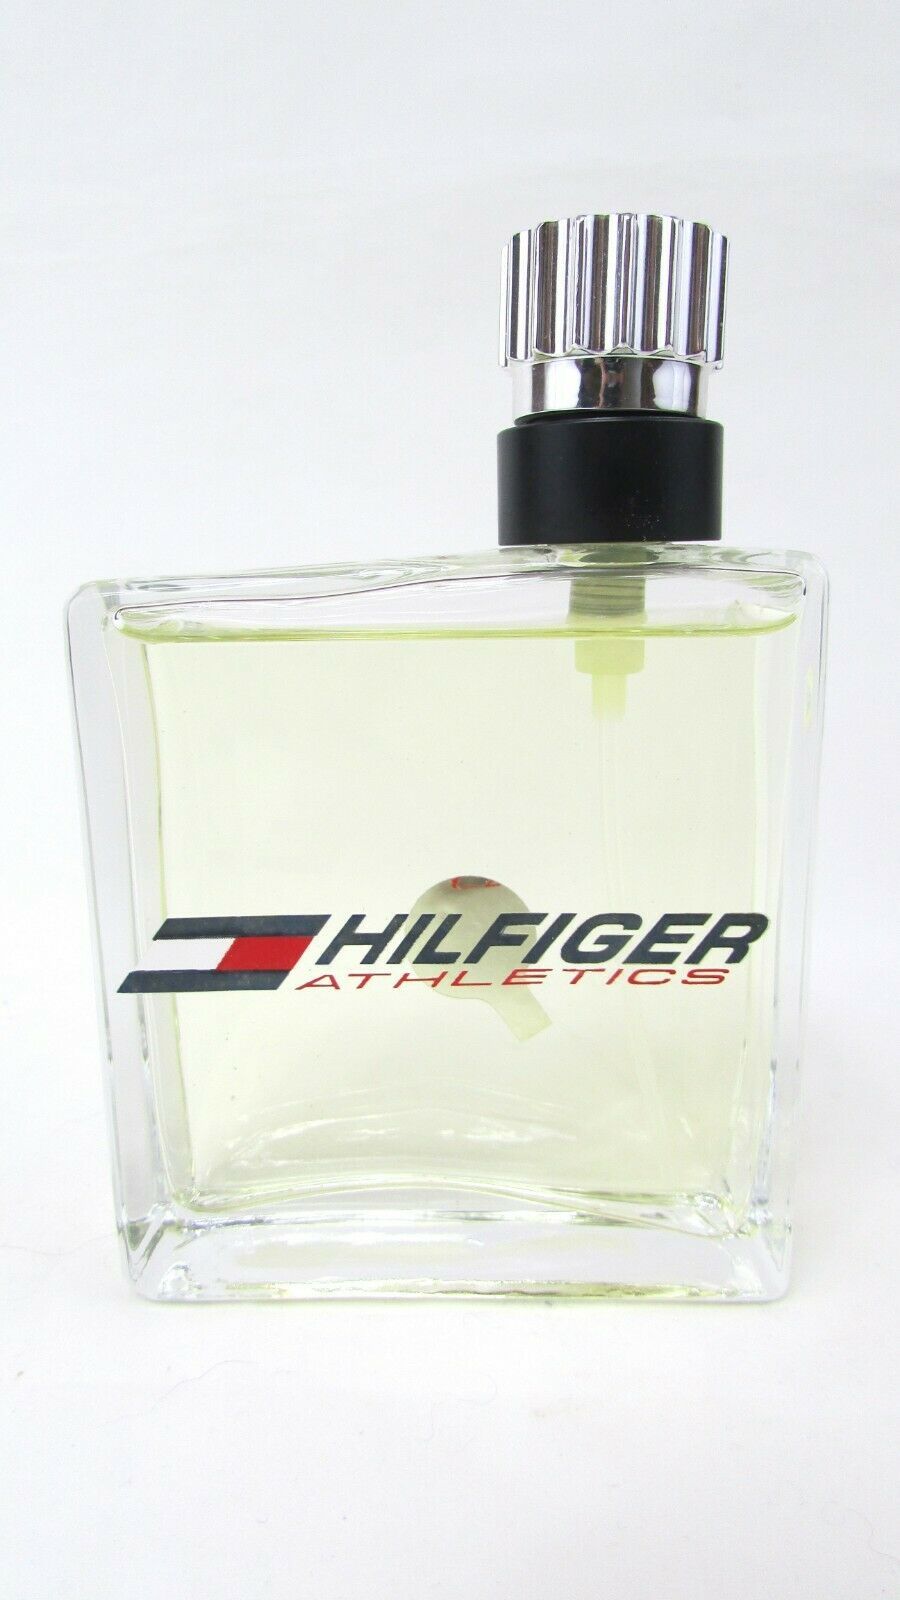 Hilfiger Athletics Cologne 34 Oz Nearly Full Bottle Spray Men